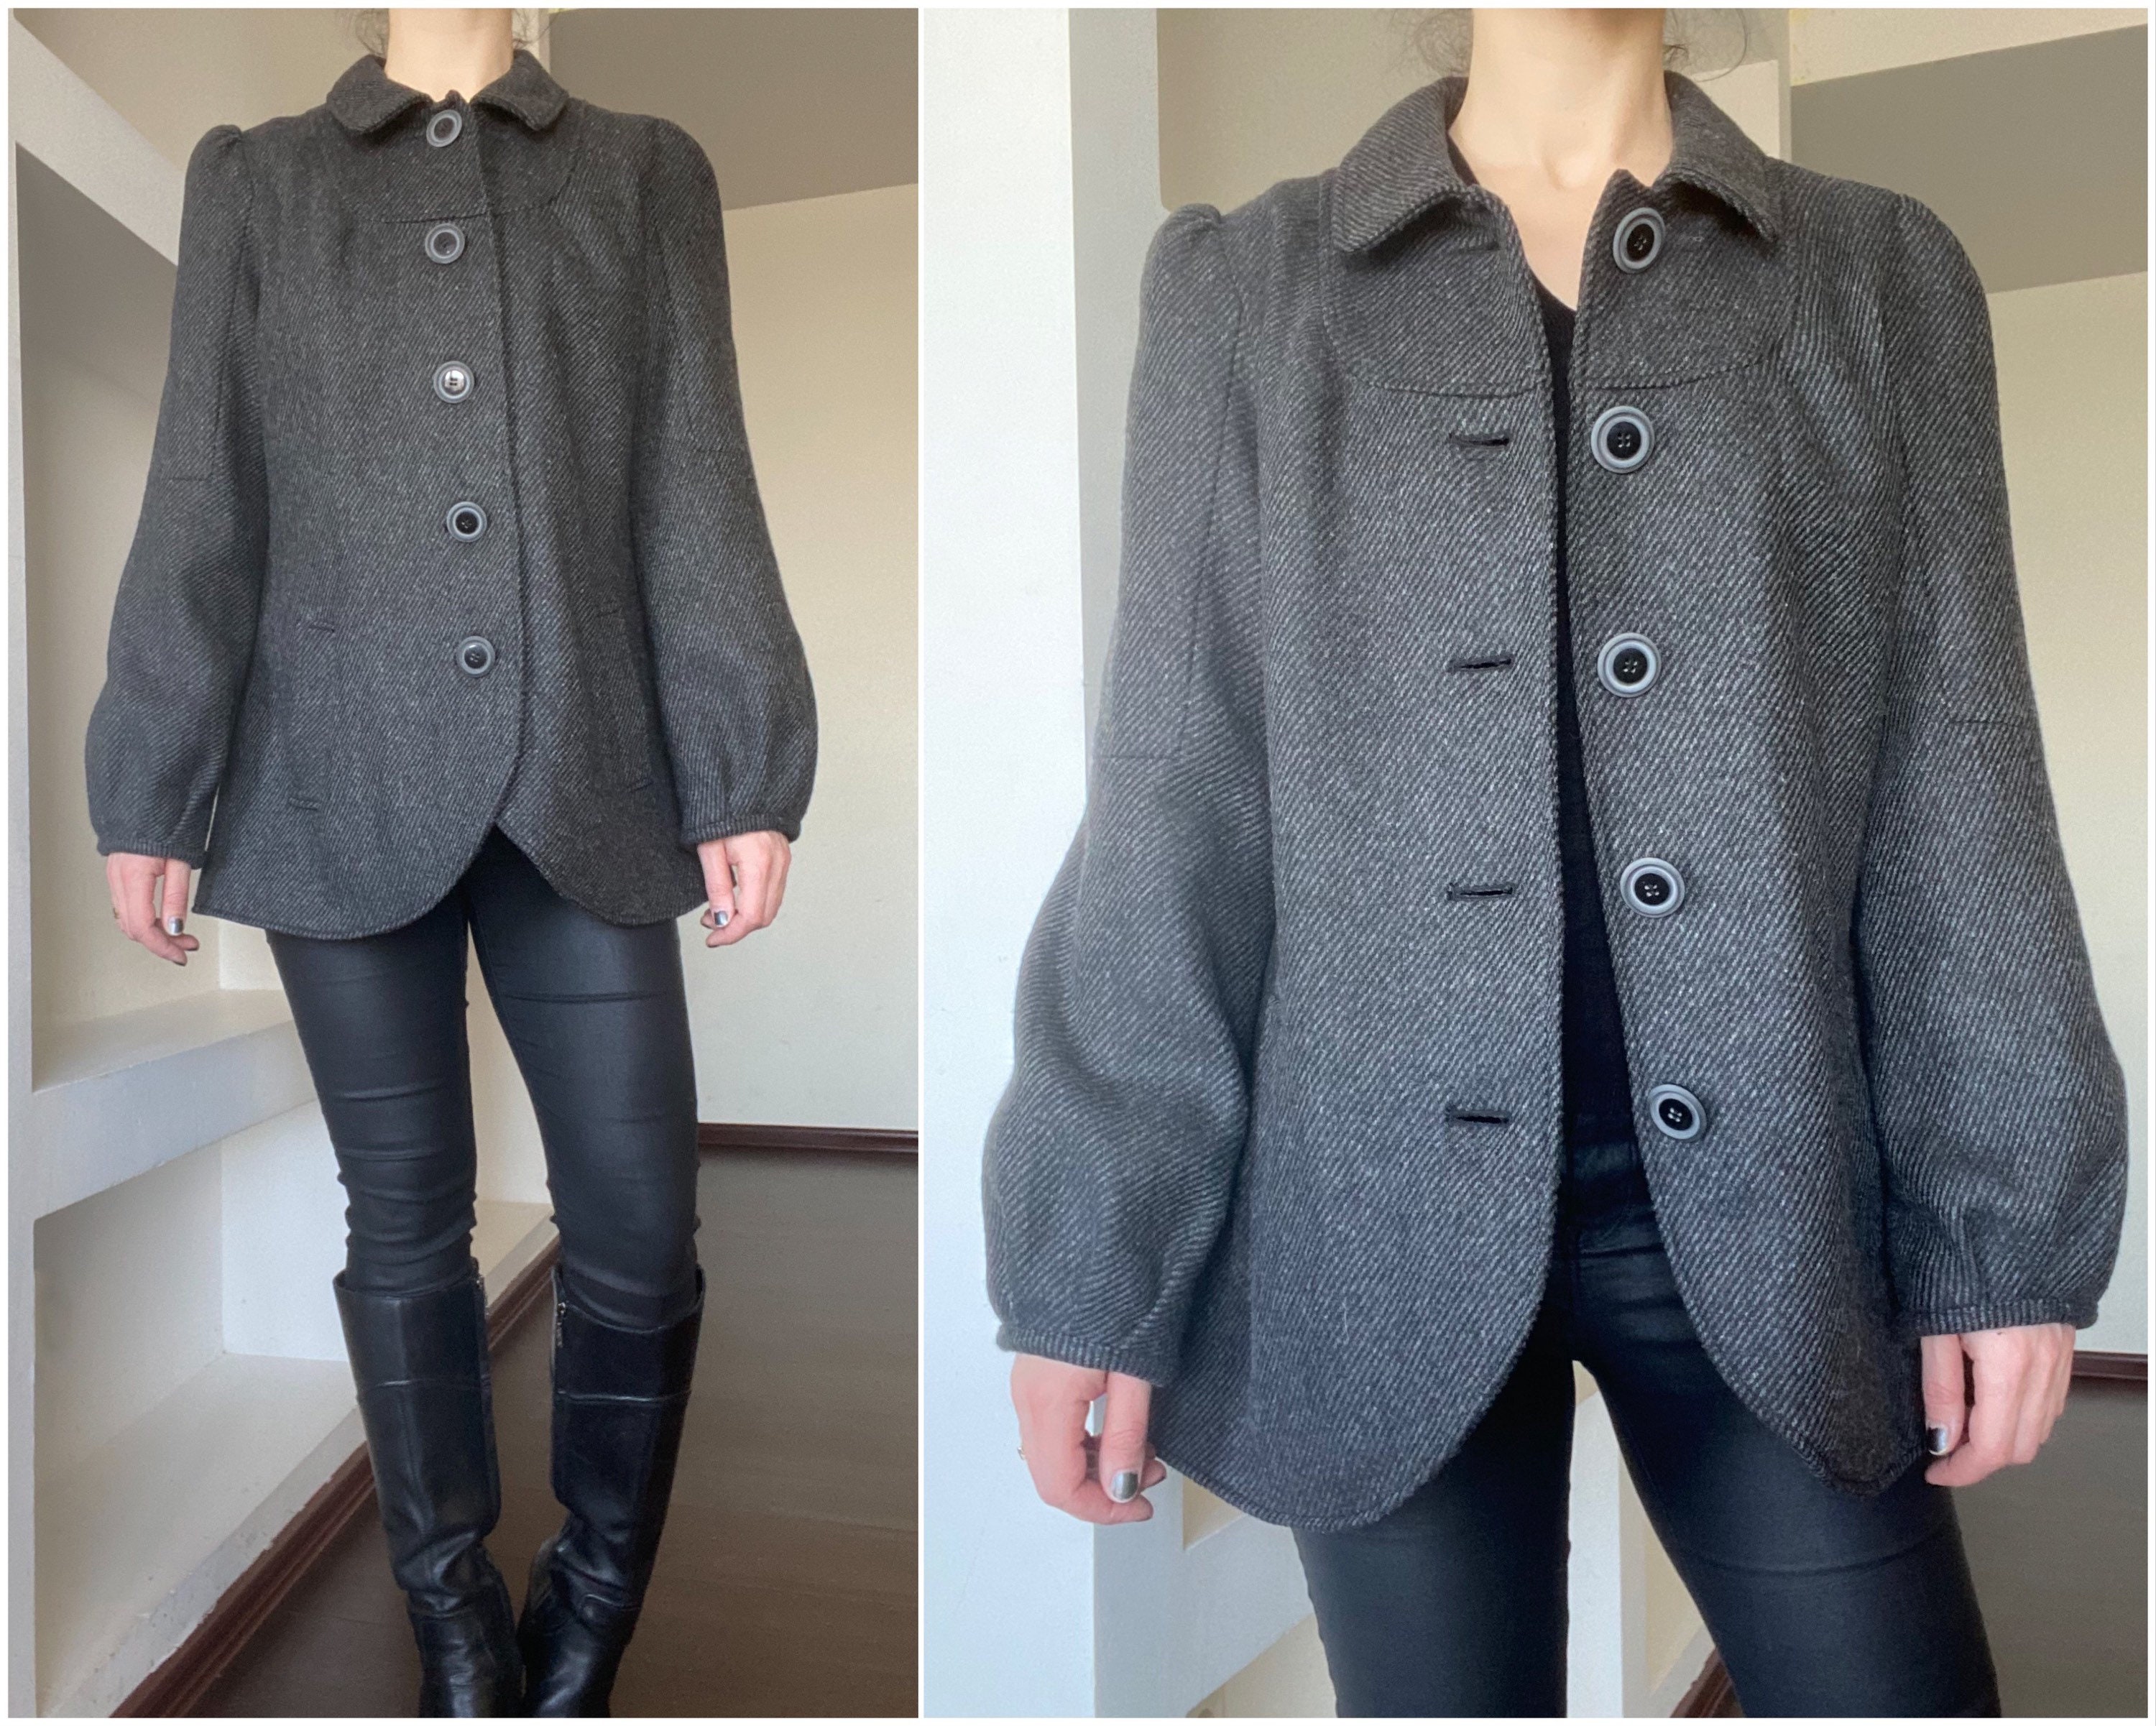 Modern tweed jackets for spring - une femme d'un certain âge